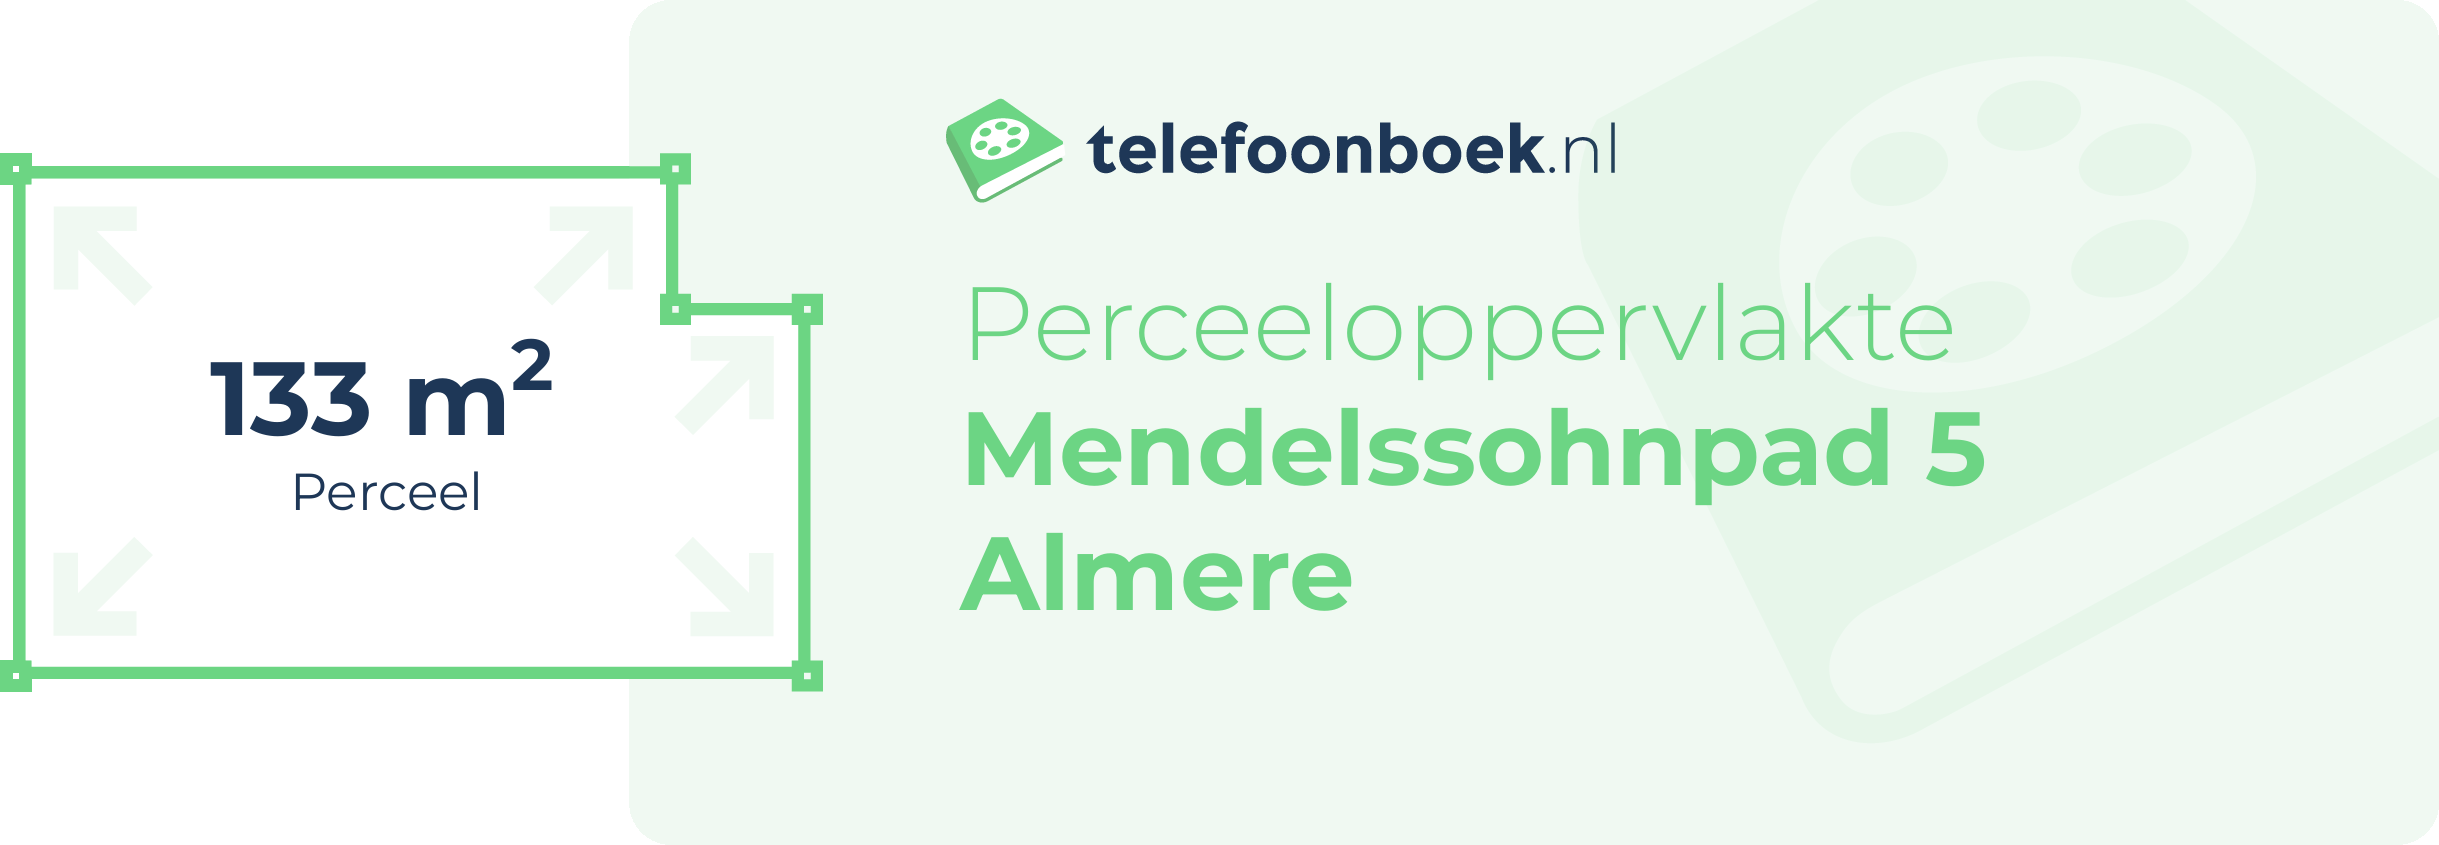 Perceeloppervlakte Mendelssohnpad 5 Almere